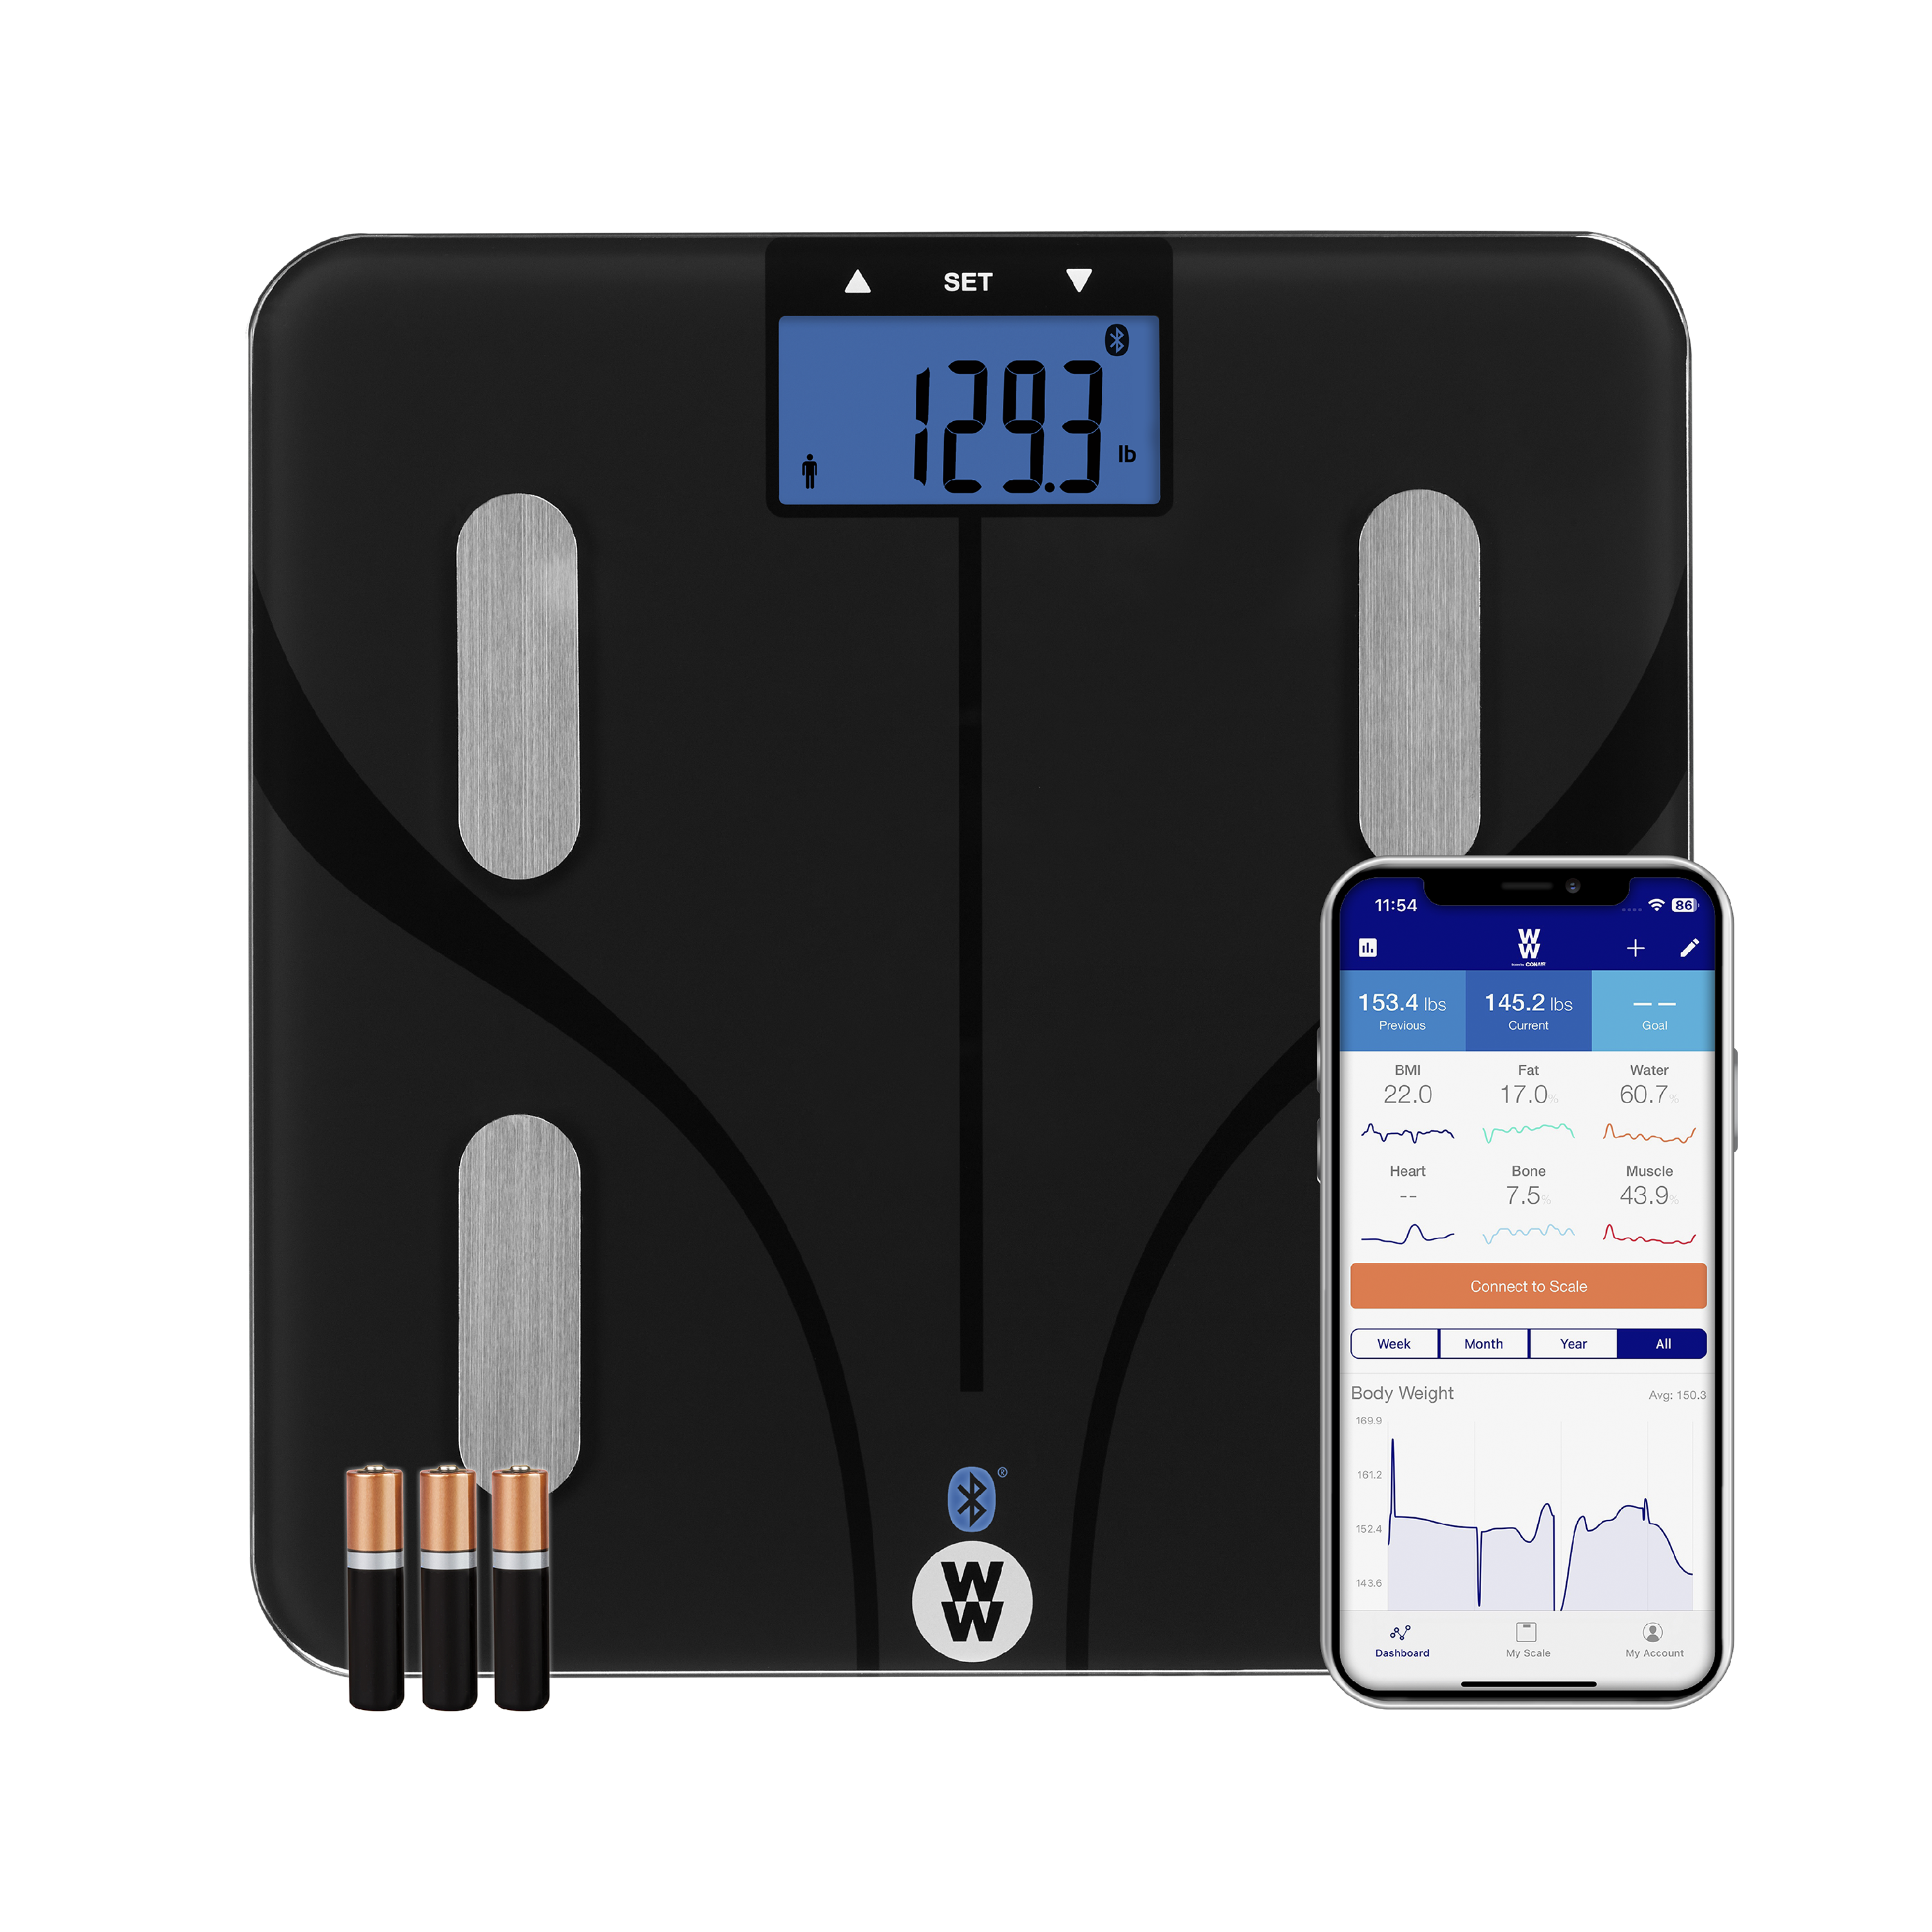 Bluetooth Body Analysis Scale